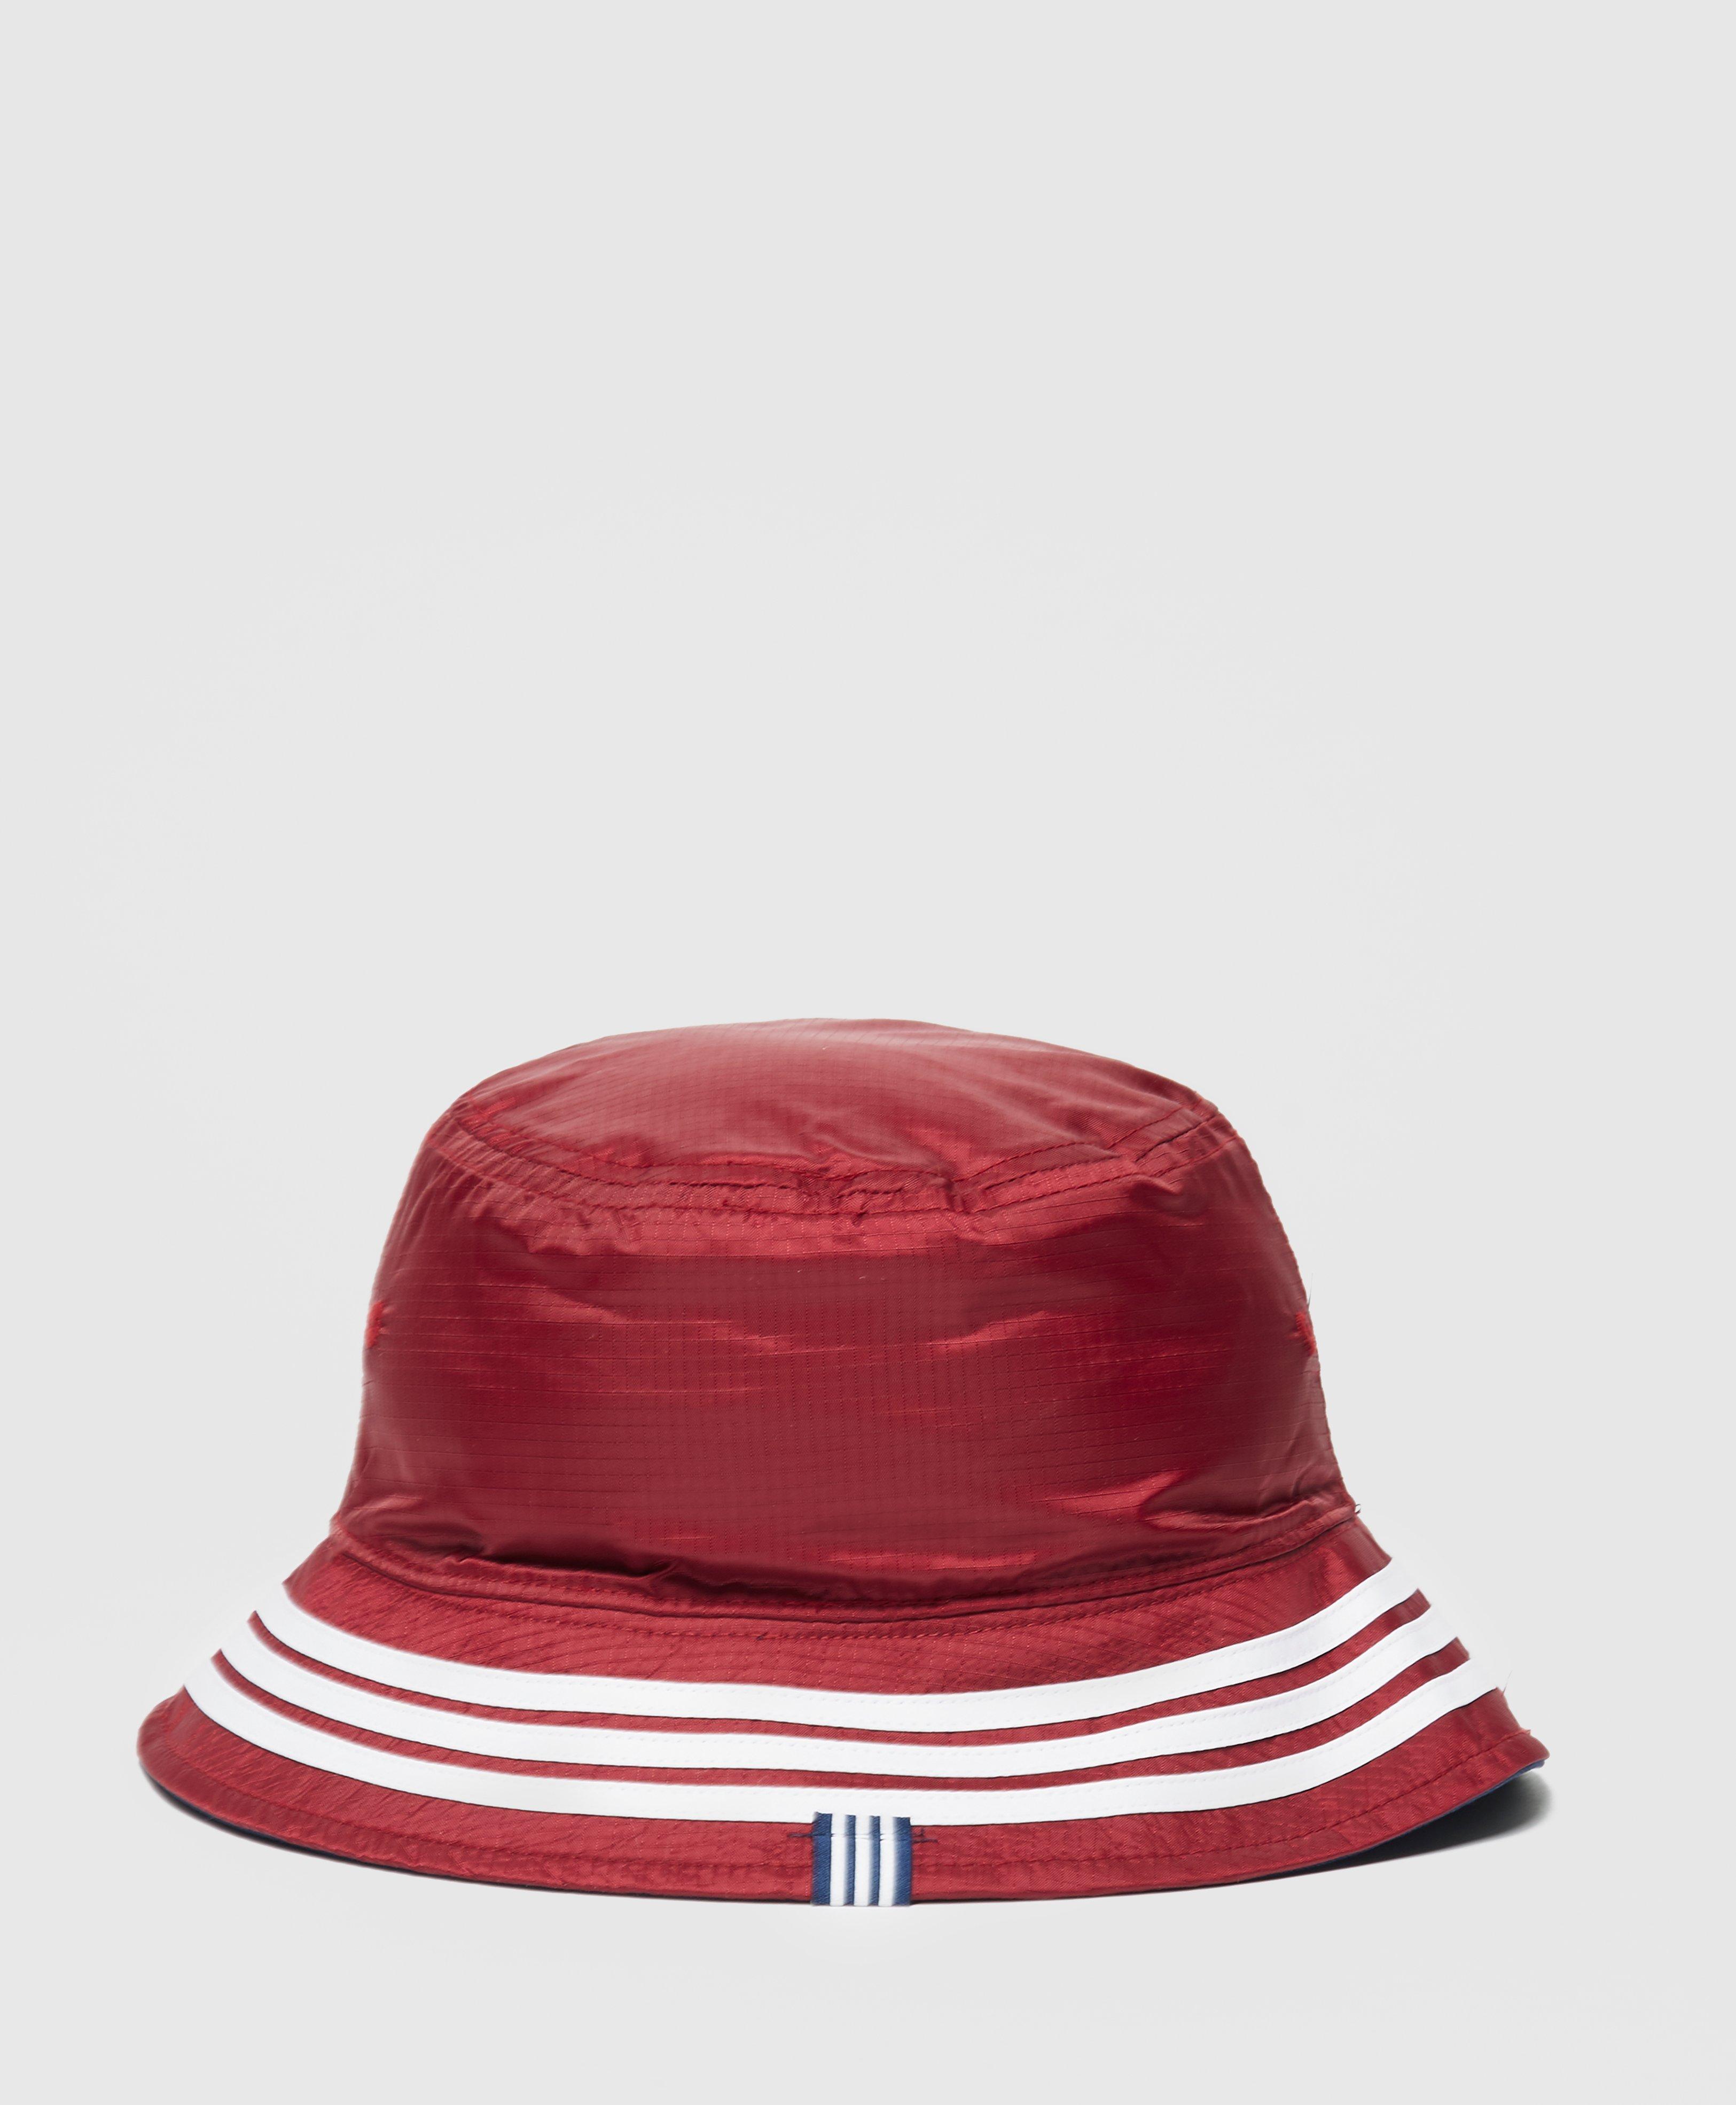 adidas Cotton Sprt Bucket Hat in Red for Men - Lyst